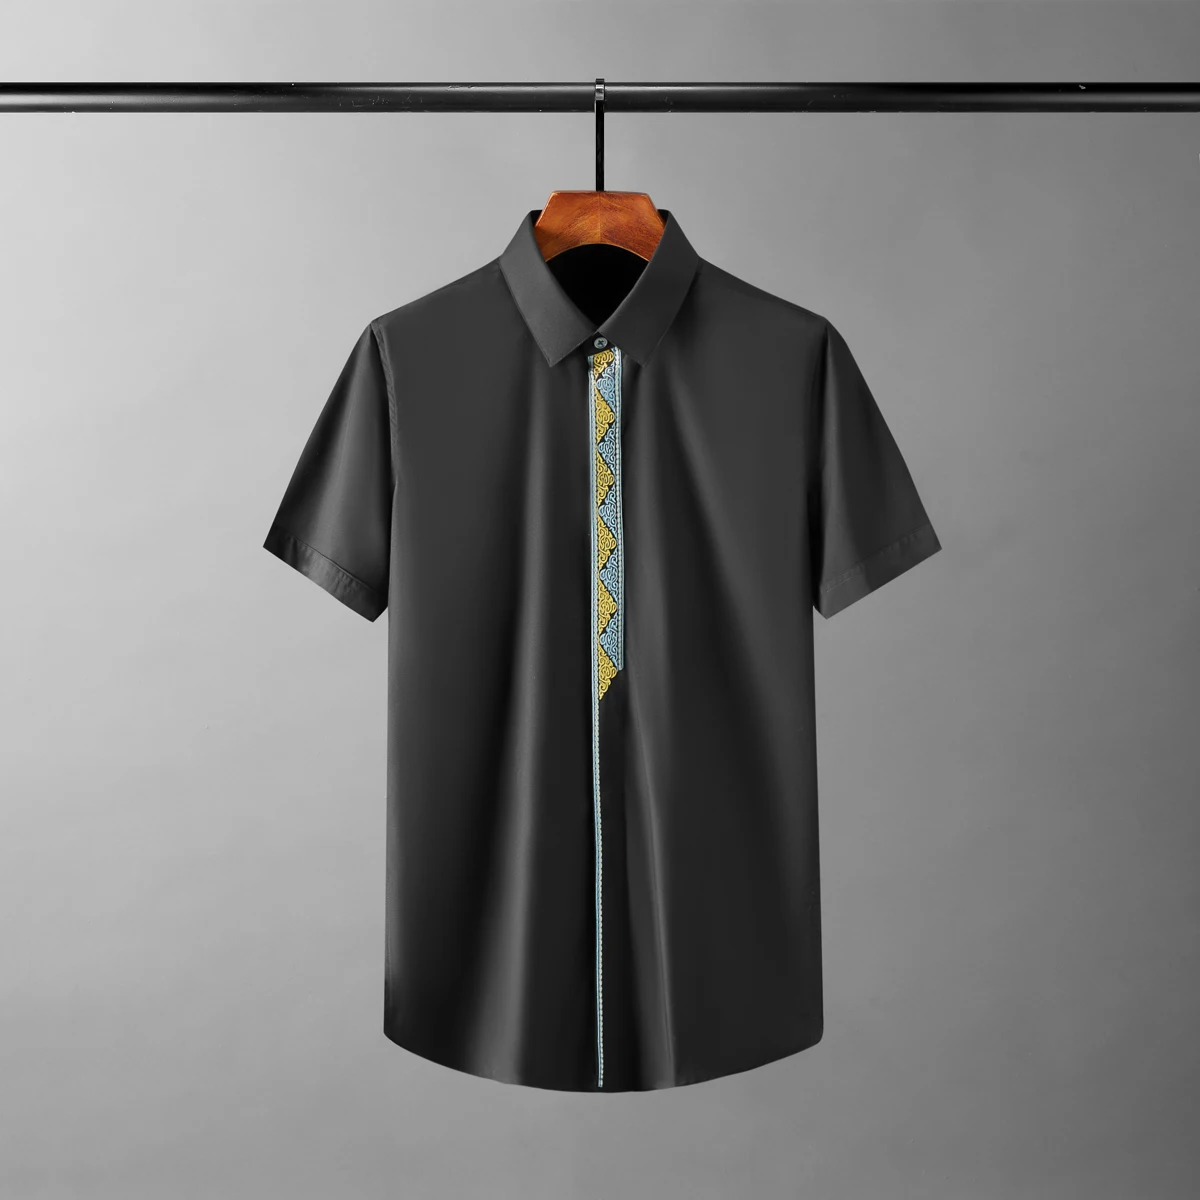 2022 Male Shirts Luxury Royal Embroidery Short Sleeve Casual Mens Dress Shirts Fashion Slim Fit Party Man Shirts Plus Size 4xl